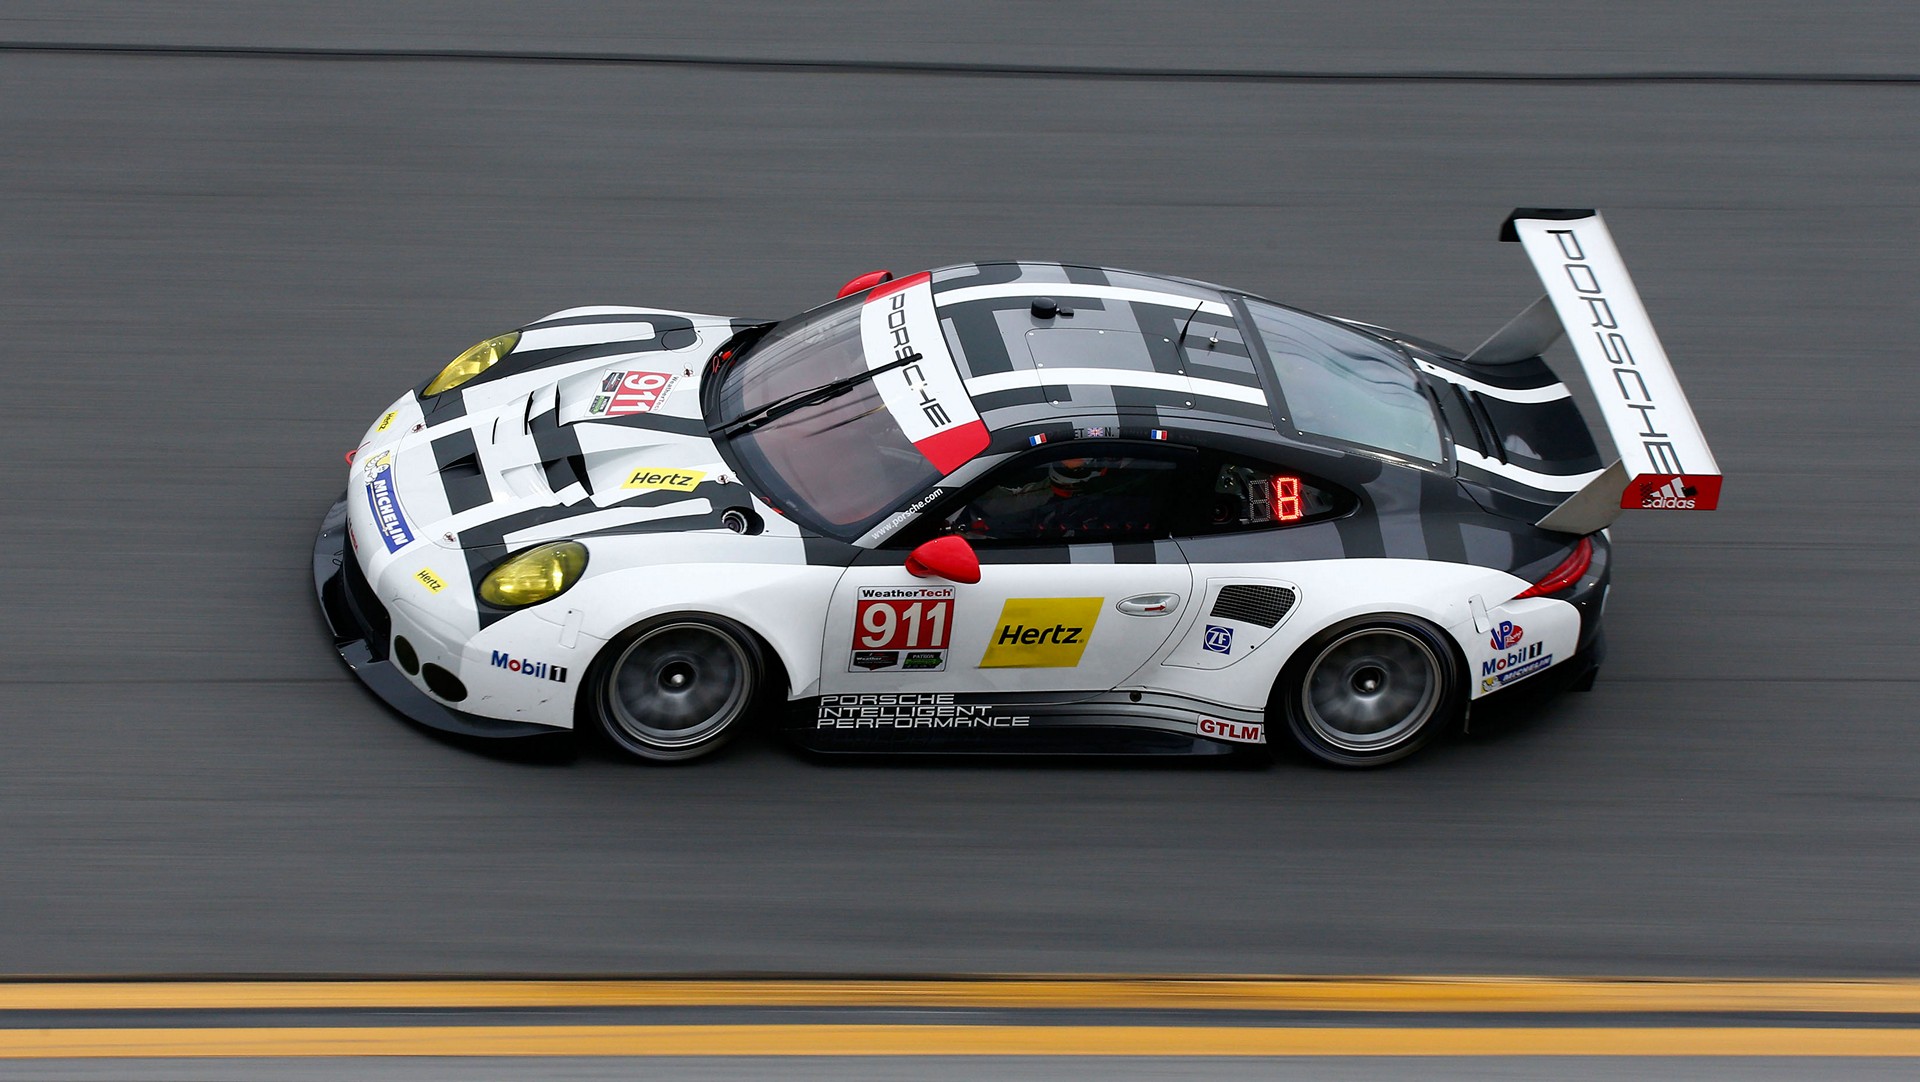 Porsche 911 RSR, Daytona, IMSA WeatherTech SportsCar Championship © Dr. Ing. h.c. F. Porsche AG